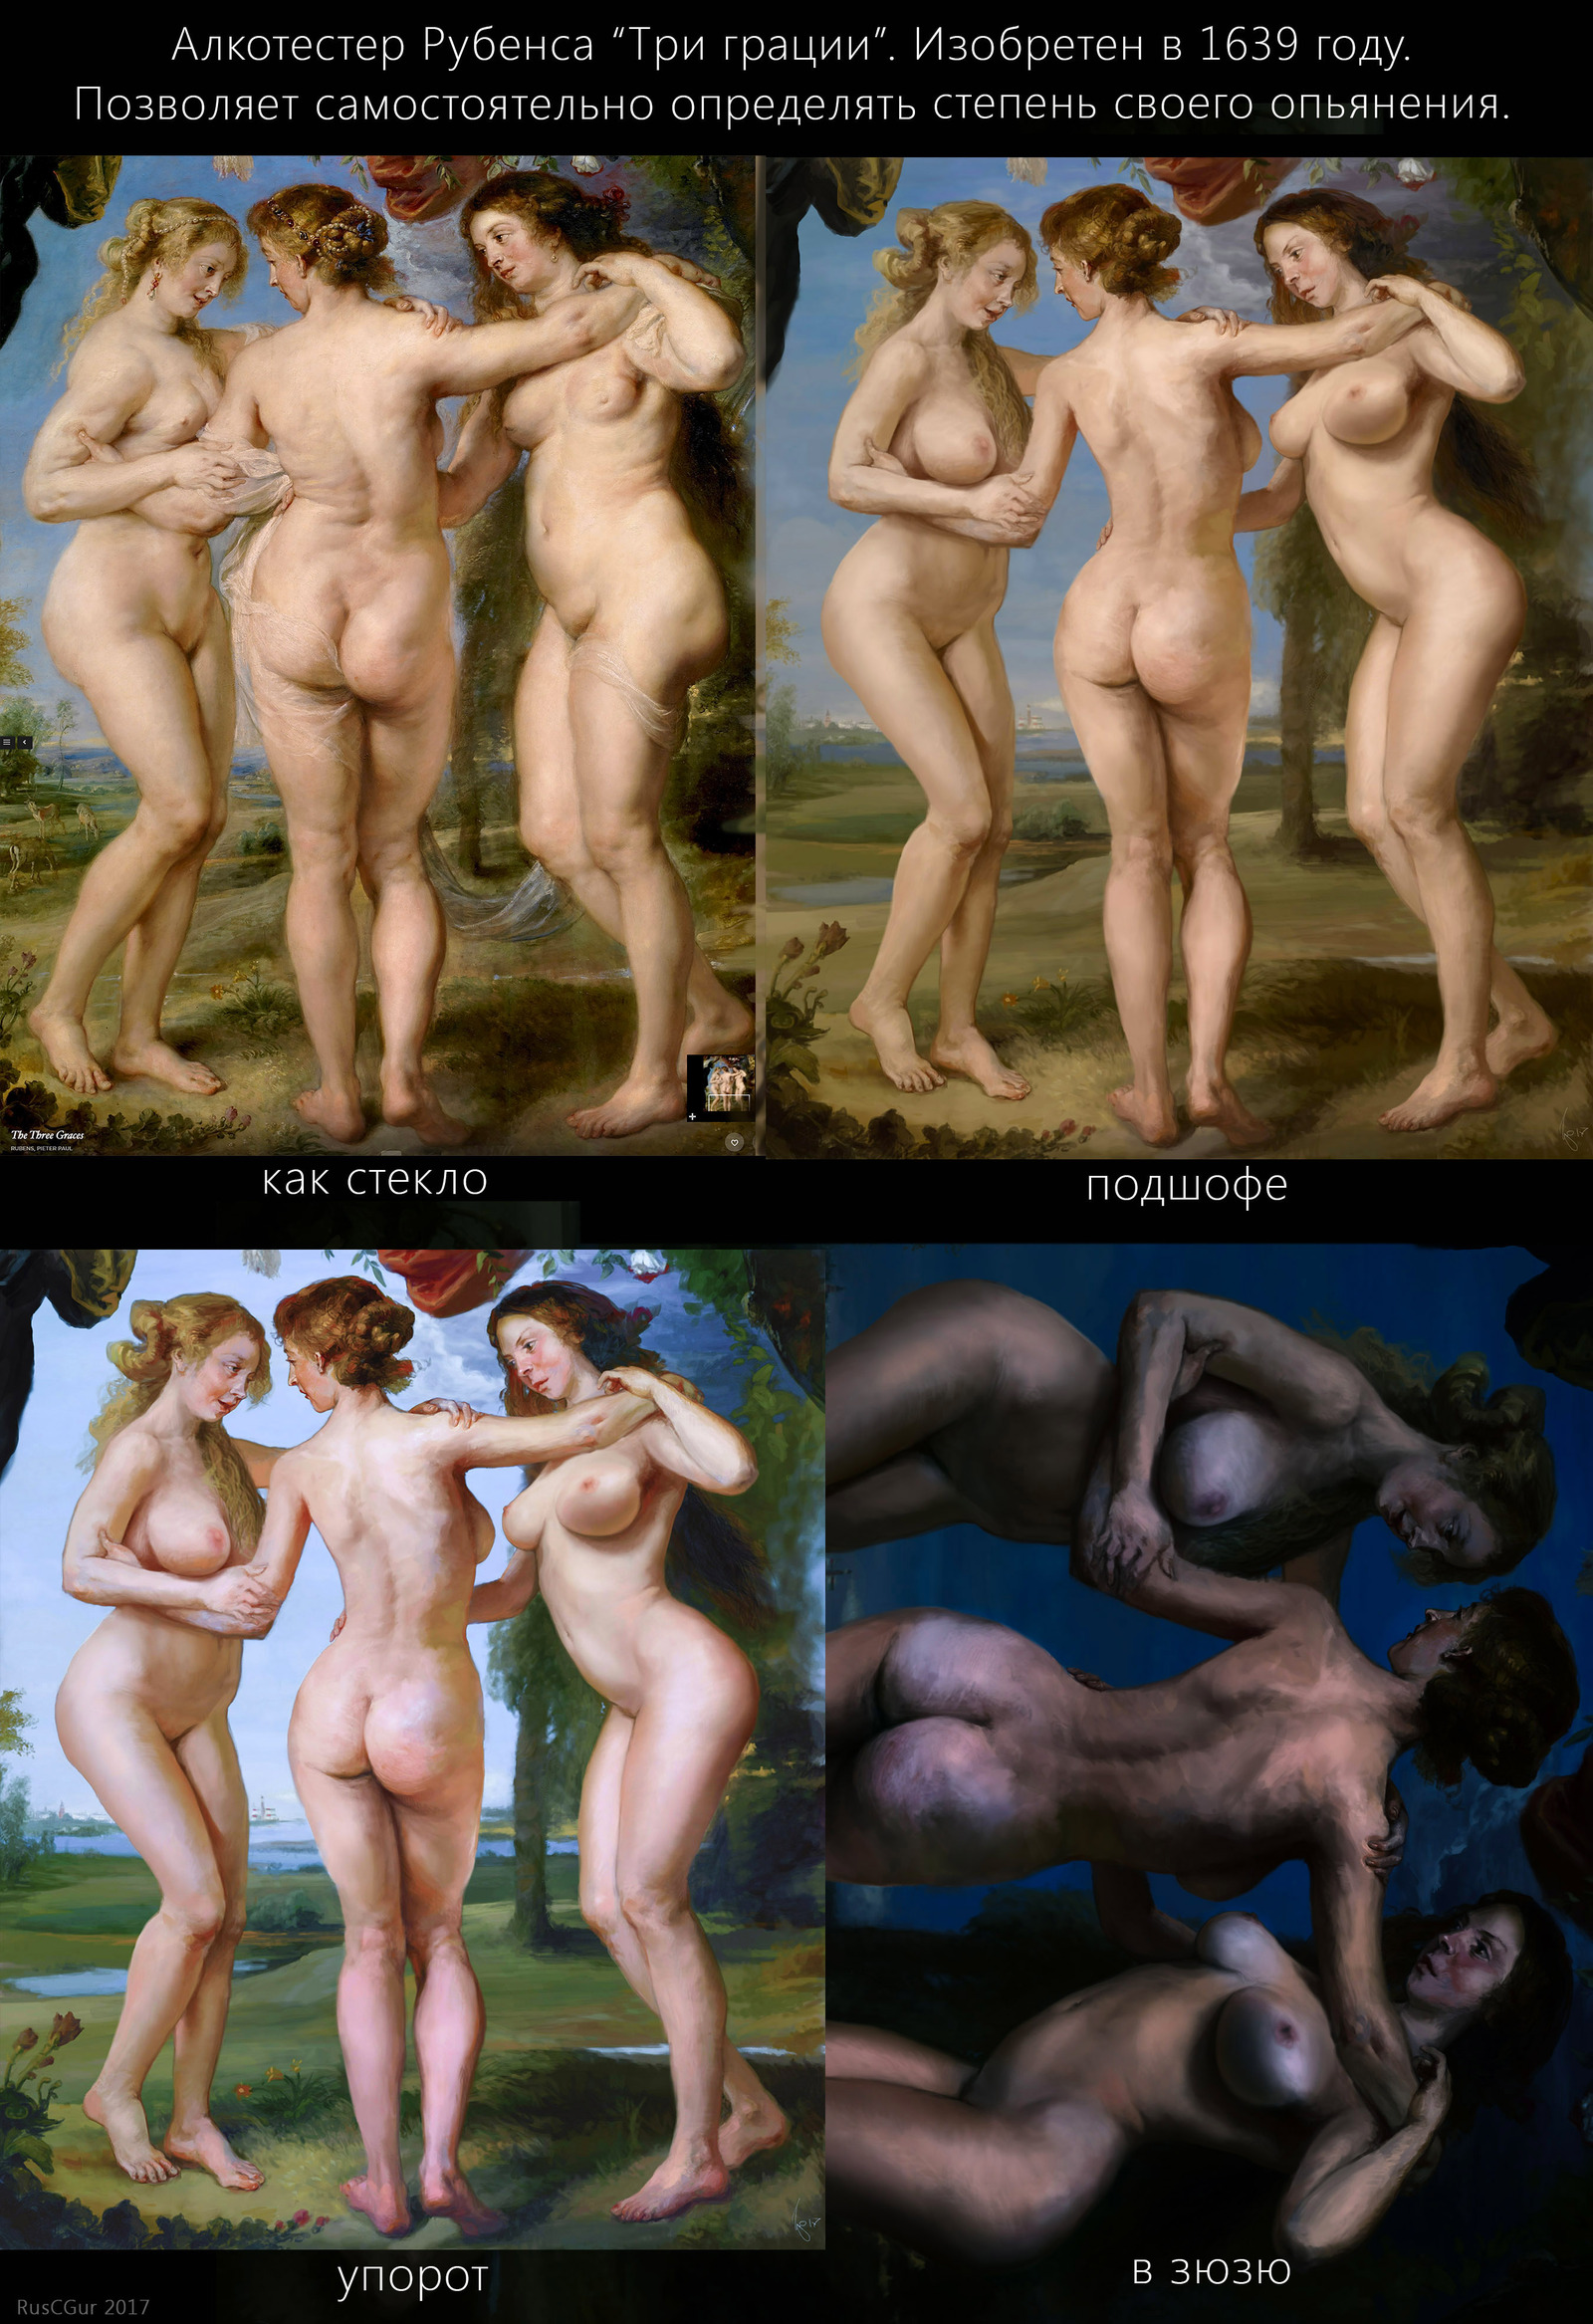 Breathalyzer Rubens Three Graces. - NSFW, My, Rubens, 18+, Erotic, Alcotest, Classic, Painting, Humor, Longpost